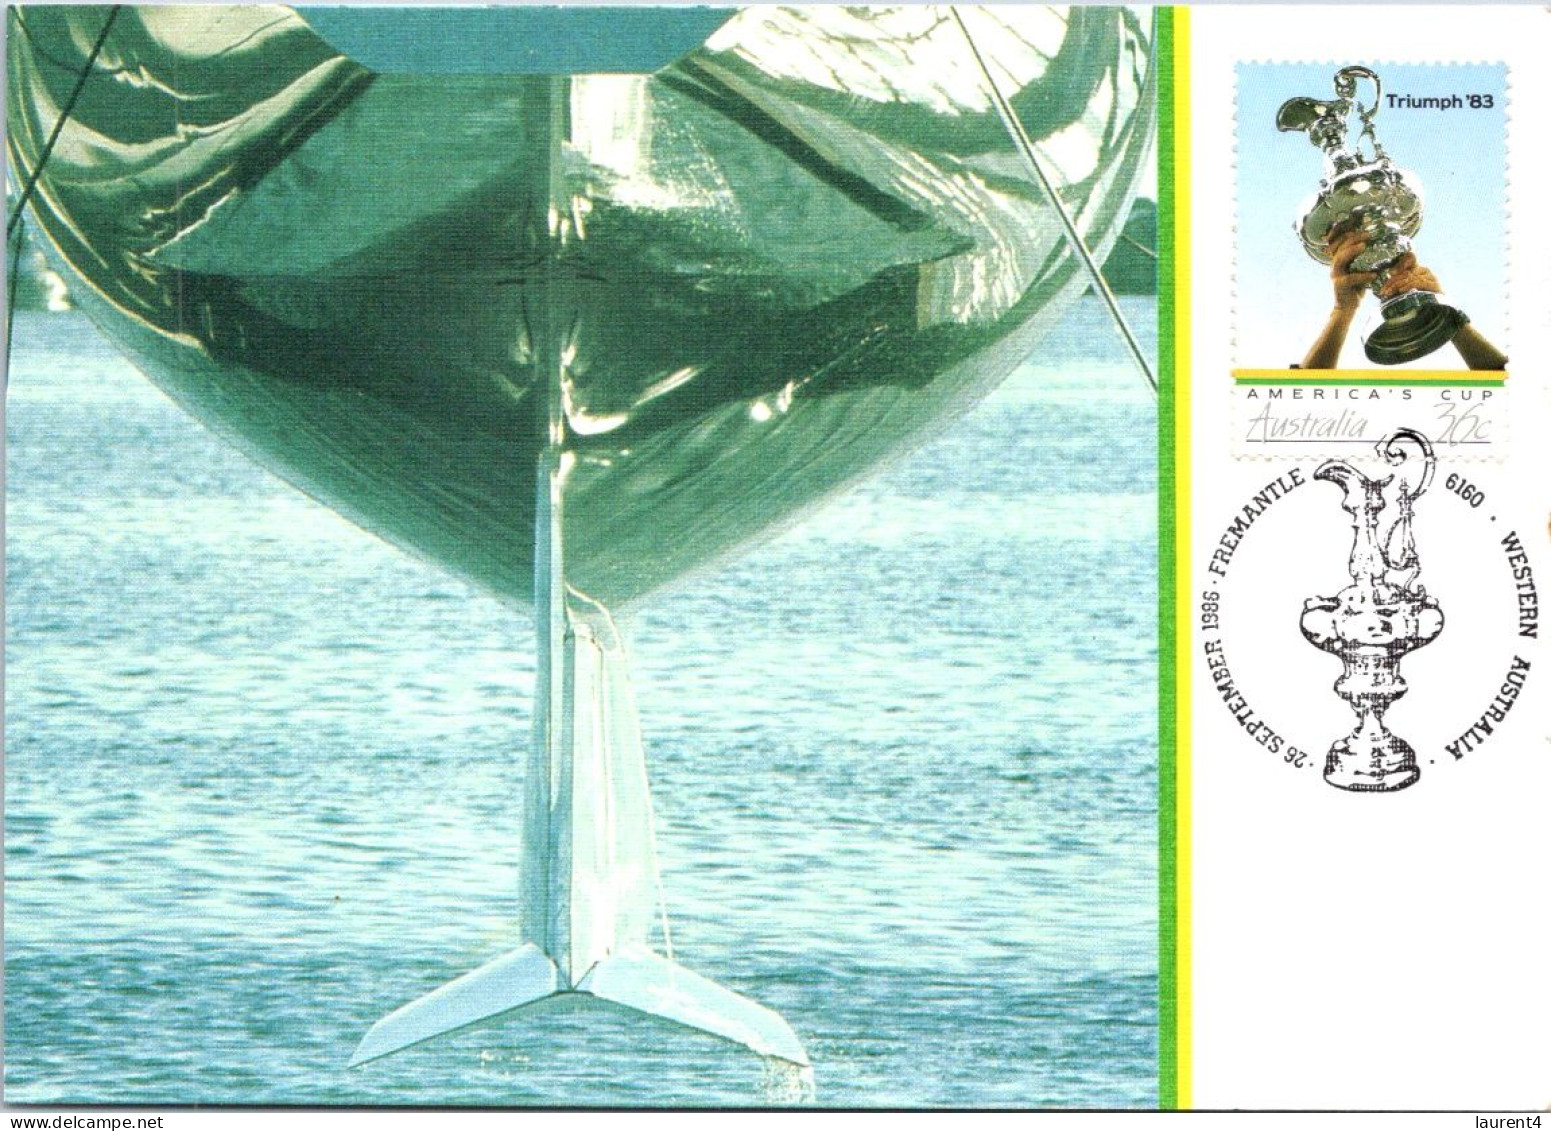 7-5-2024 (4 Z 30) Australia - America Cuo Triomph 1983 (sailing) 7 Postcards - Segeln